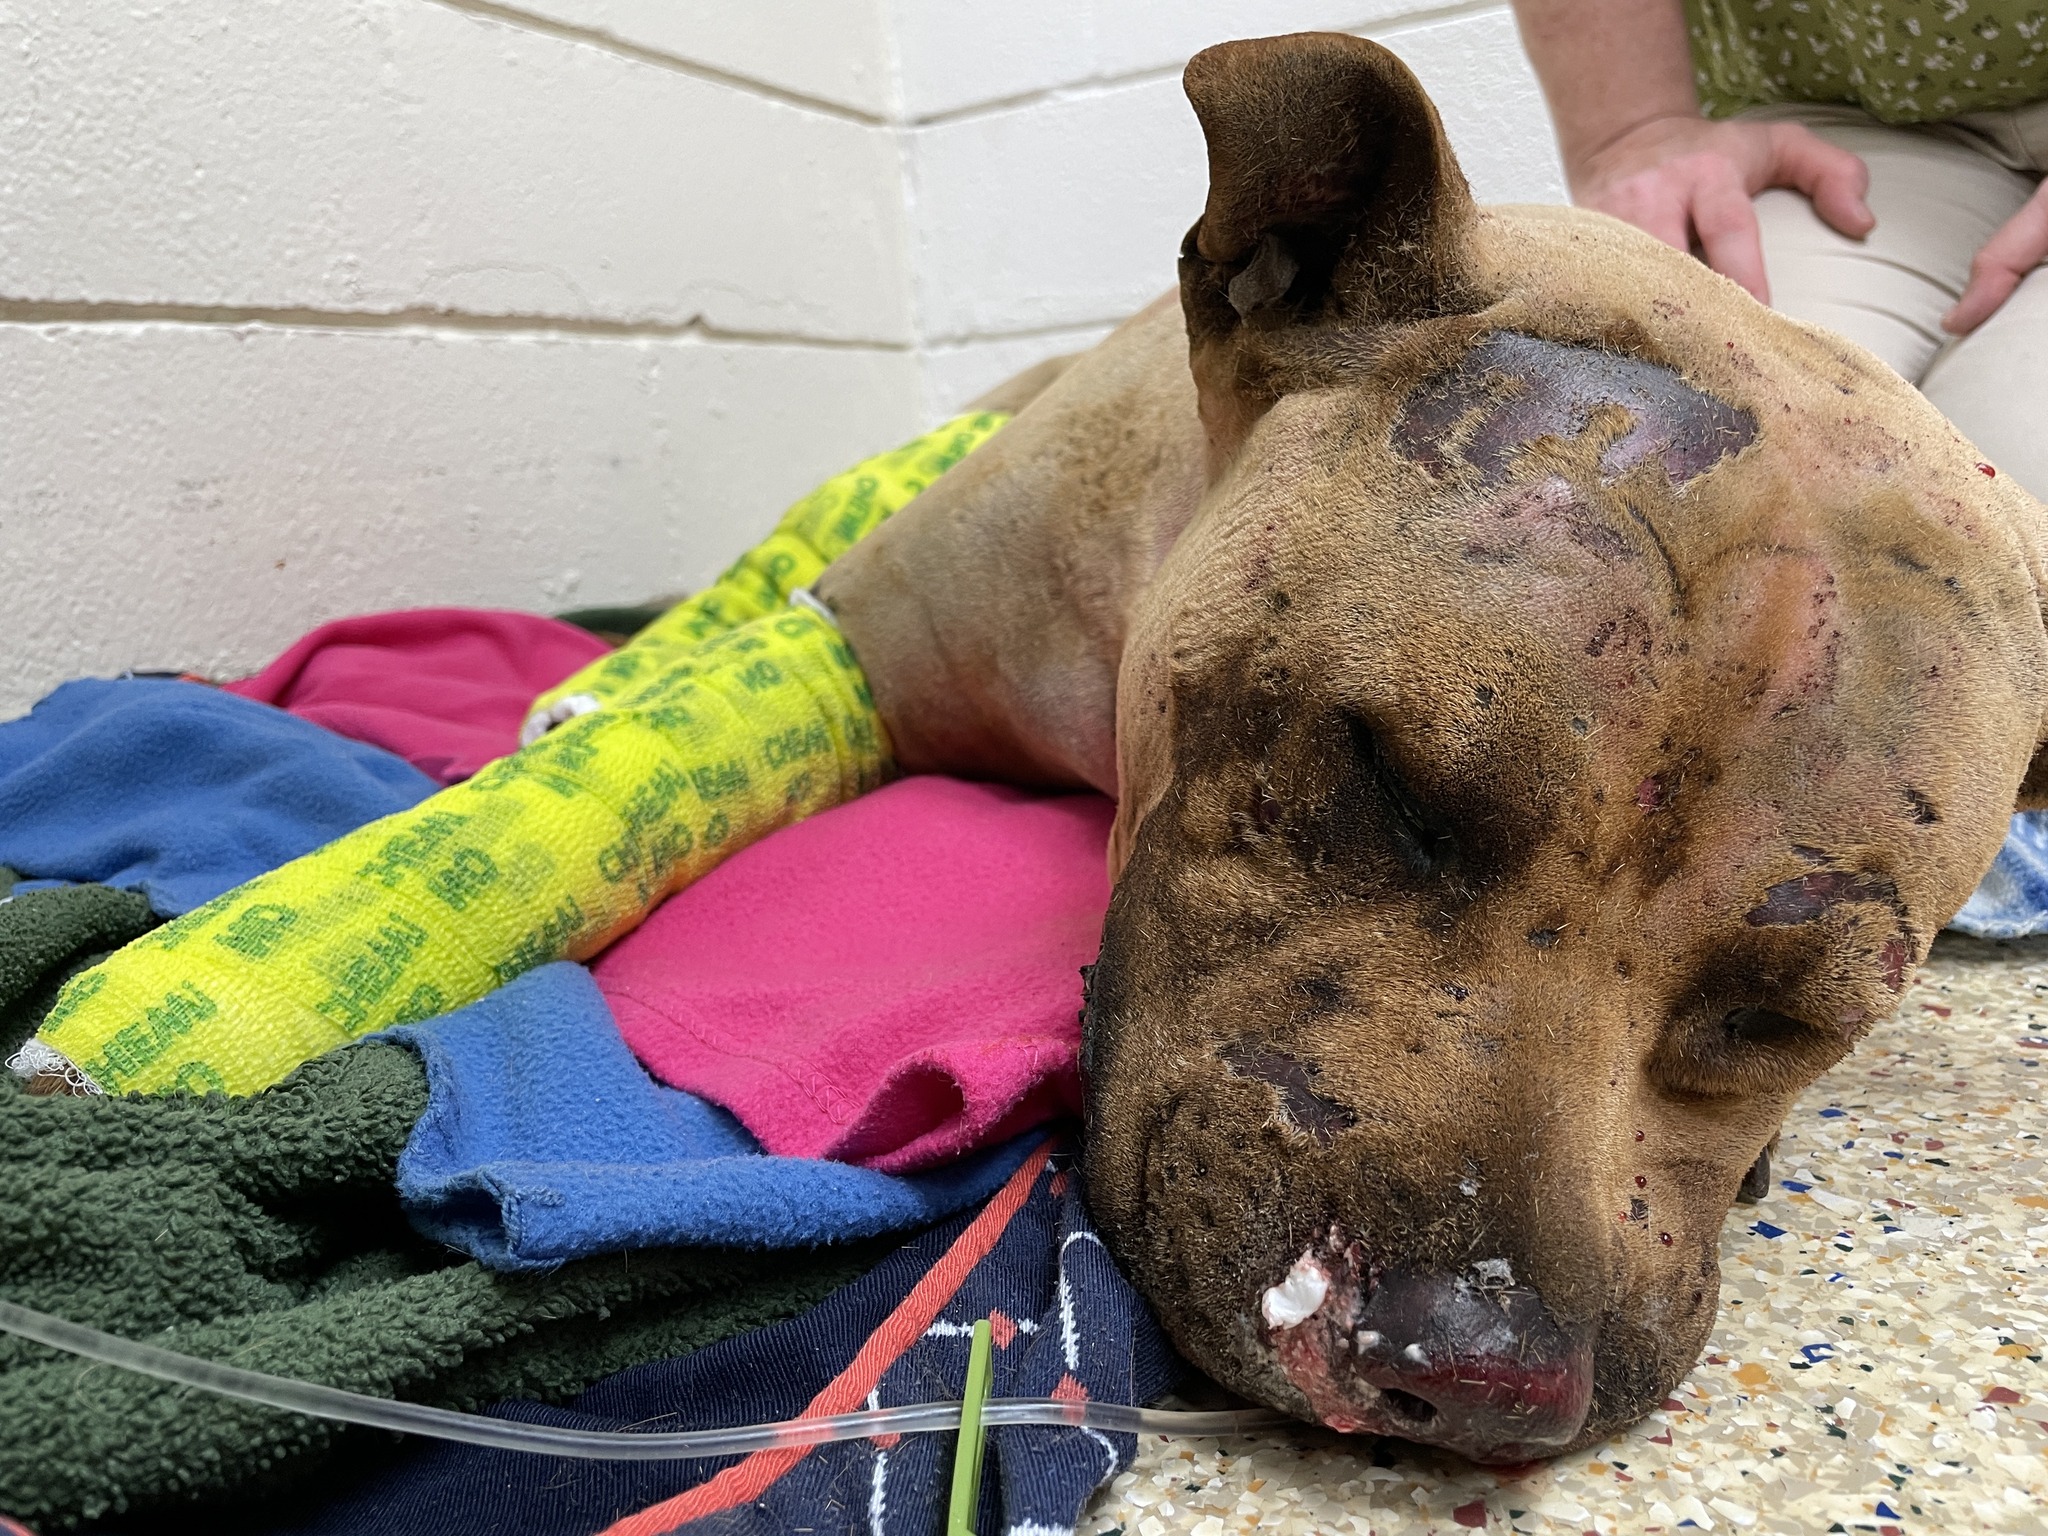 Cruelty case: Dog set on fire, burned alive